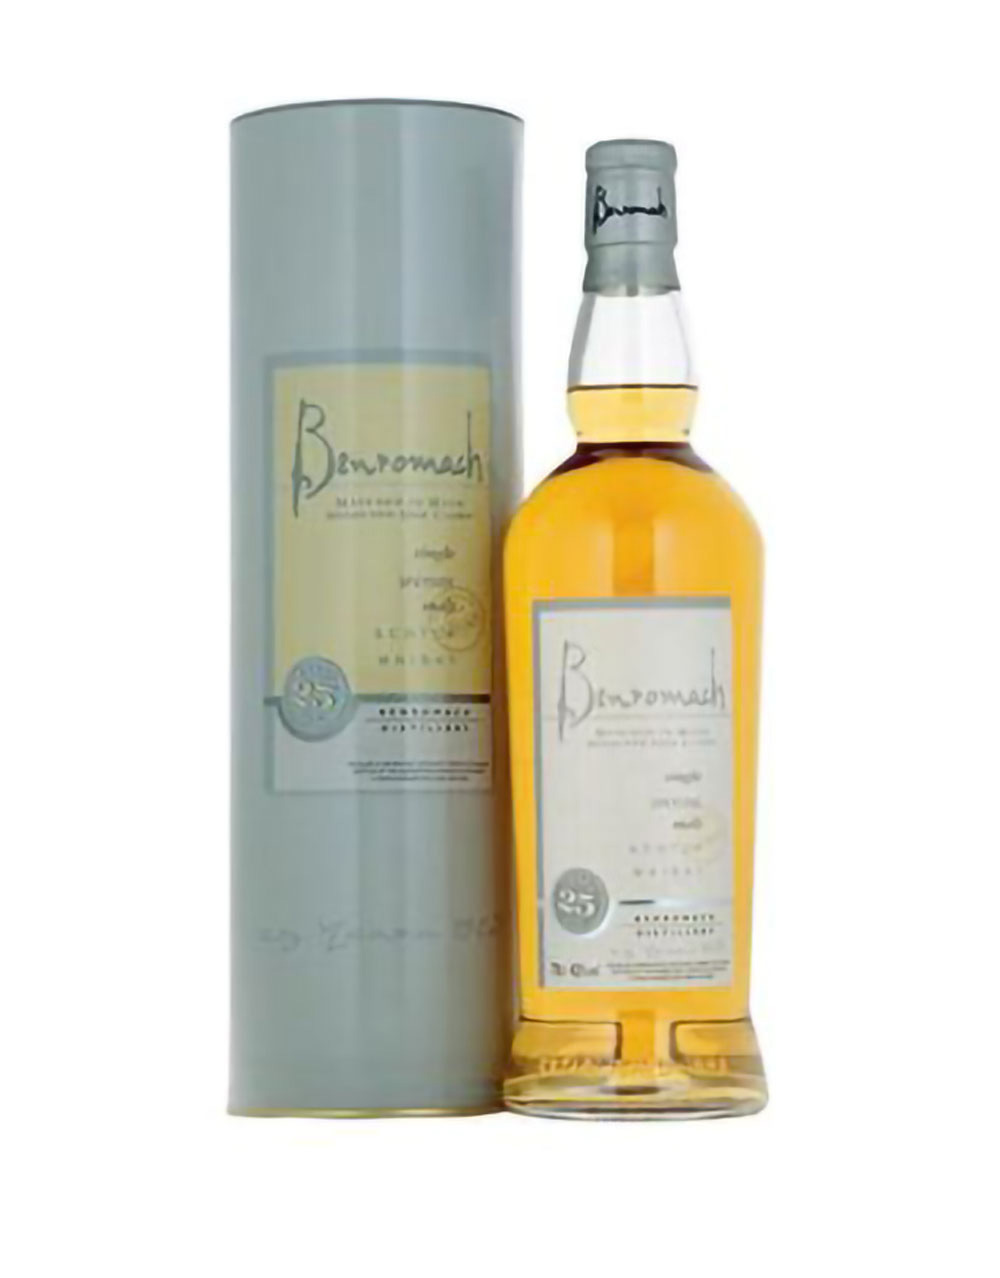 Benromach 25 Year Old Speyside Single Malt Scotch Whisky